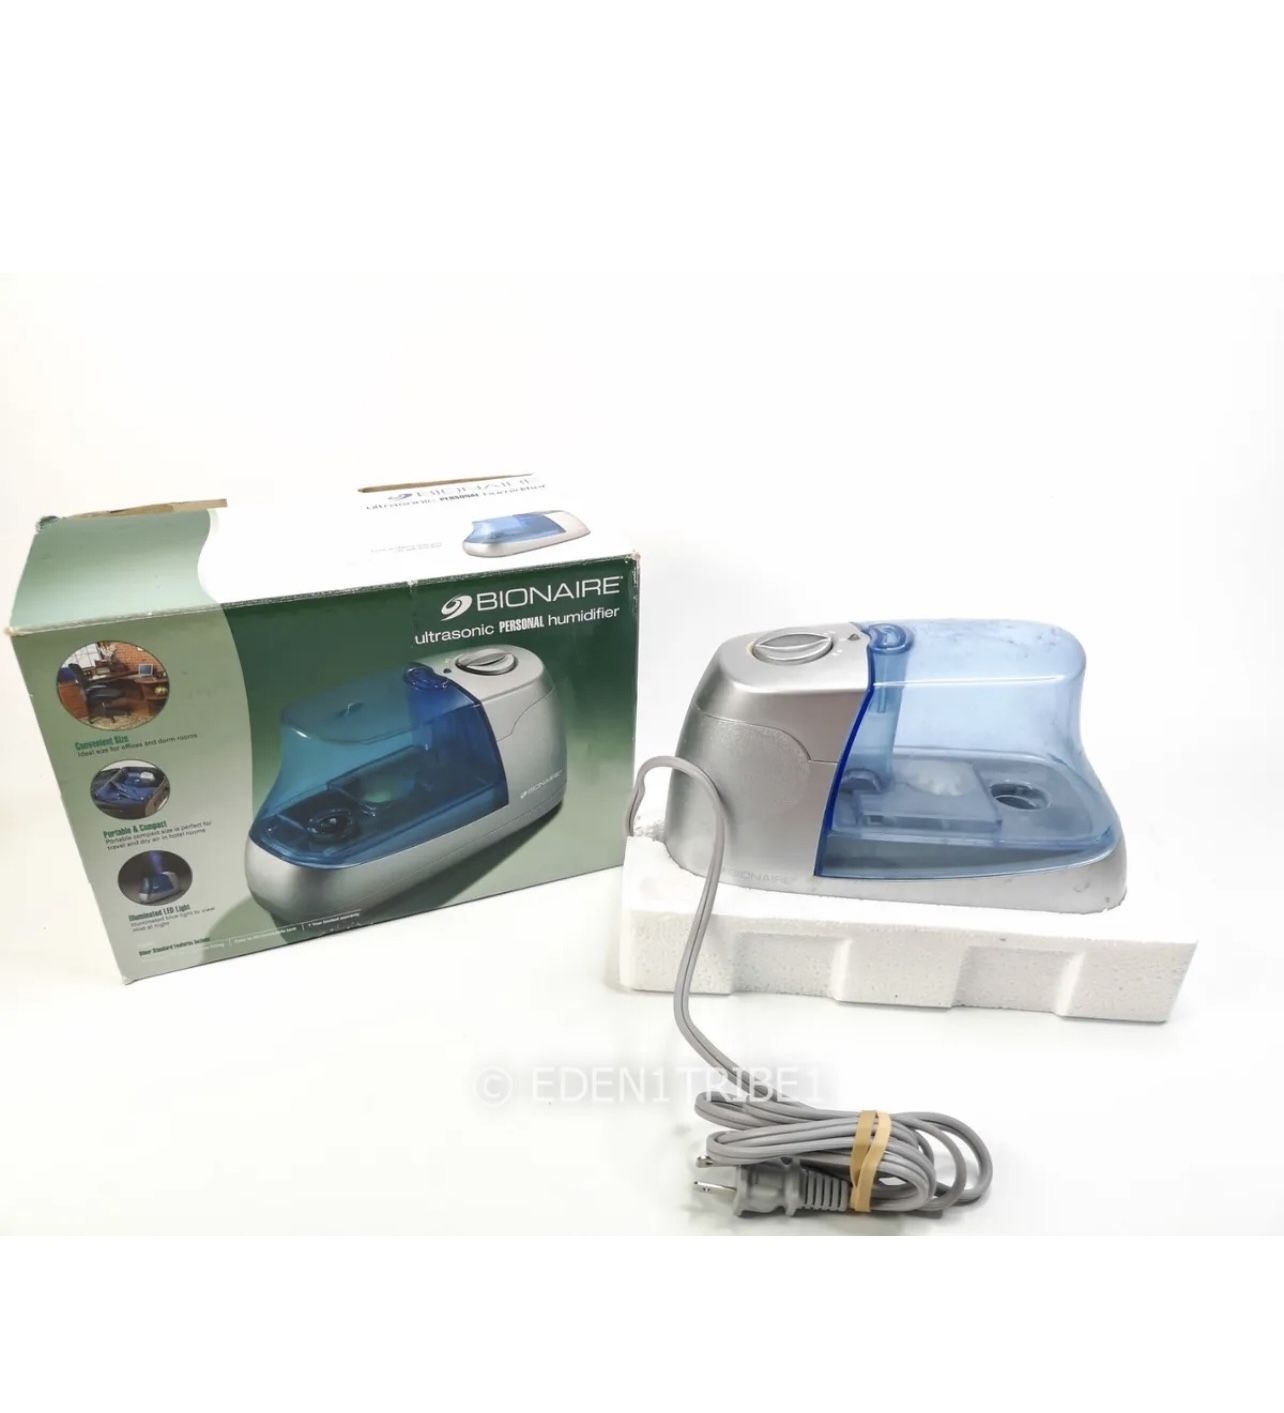 Bionaire Personal Ultrasonic Humidifier 